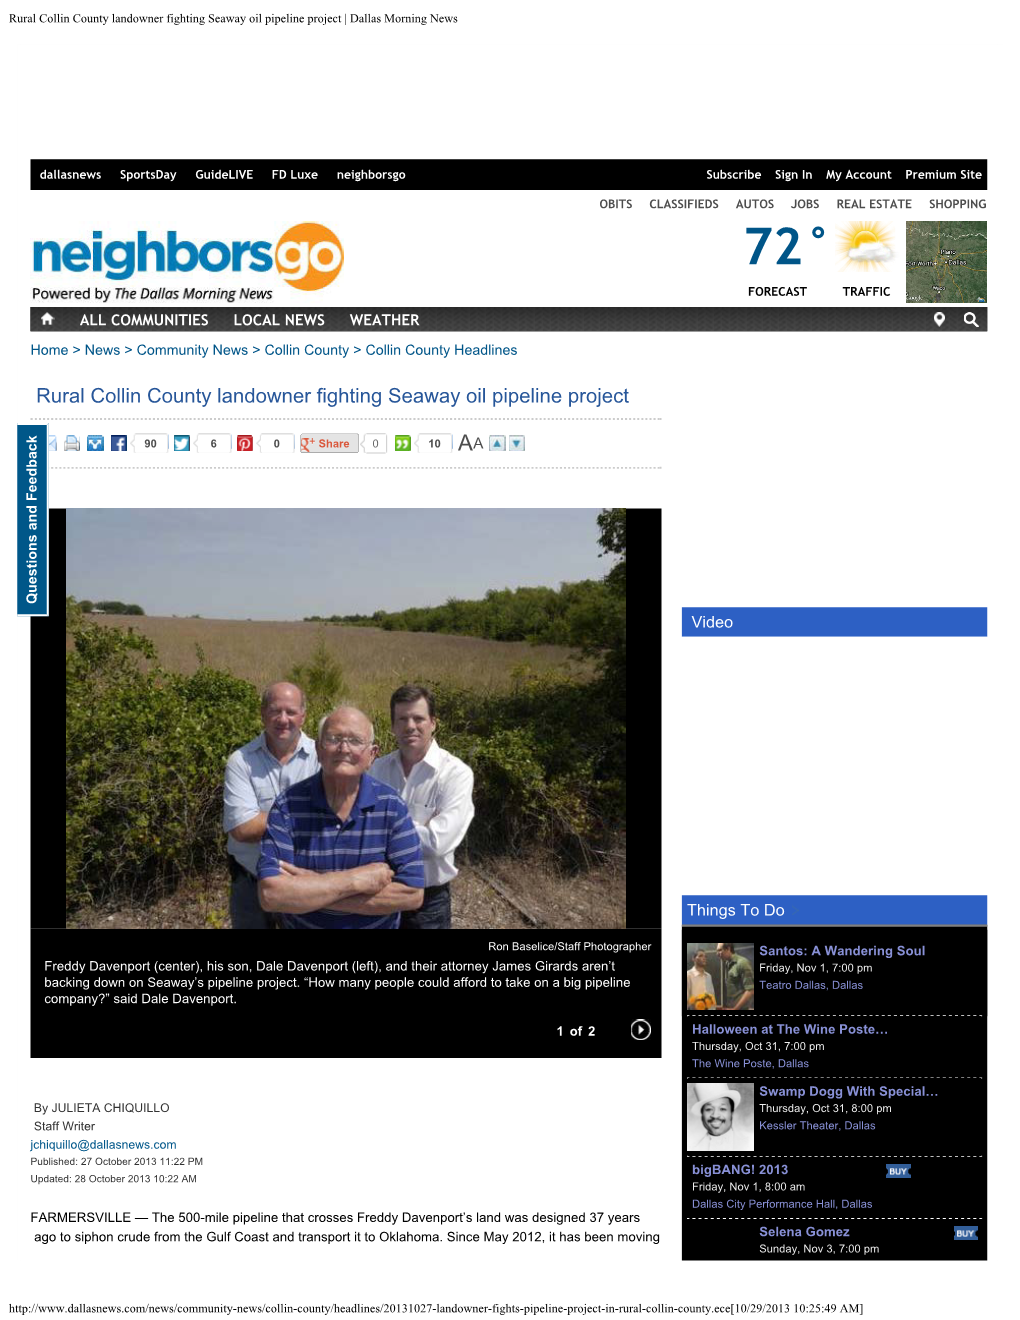 Rural Collin County Landowner Fighting Seaway Oil Pipeline Project | Dallas Morning News